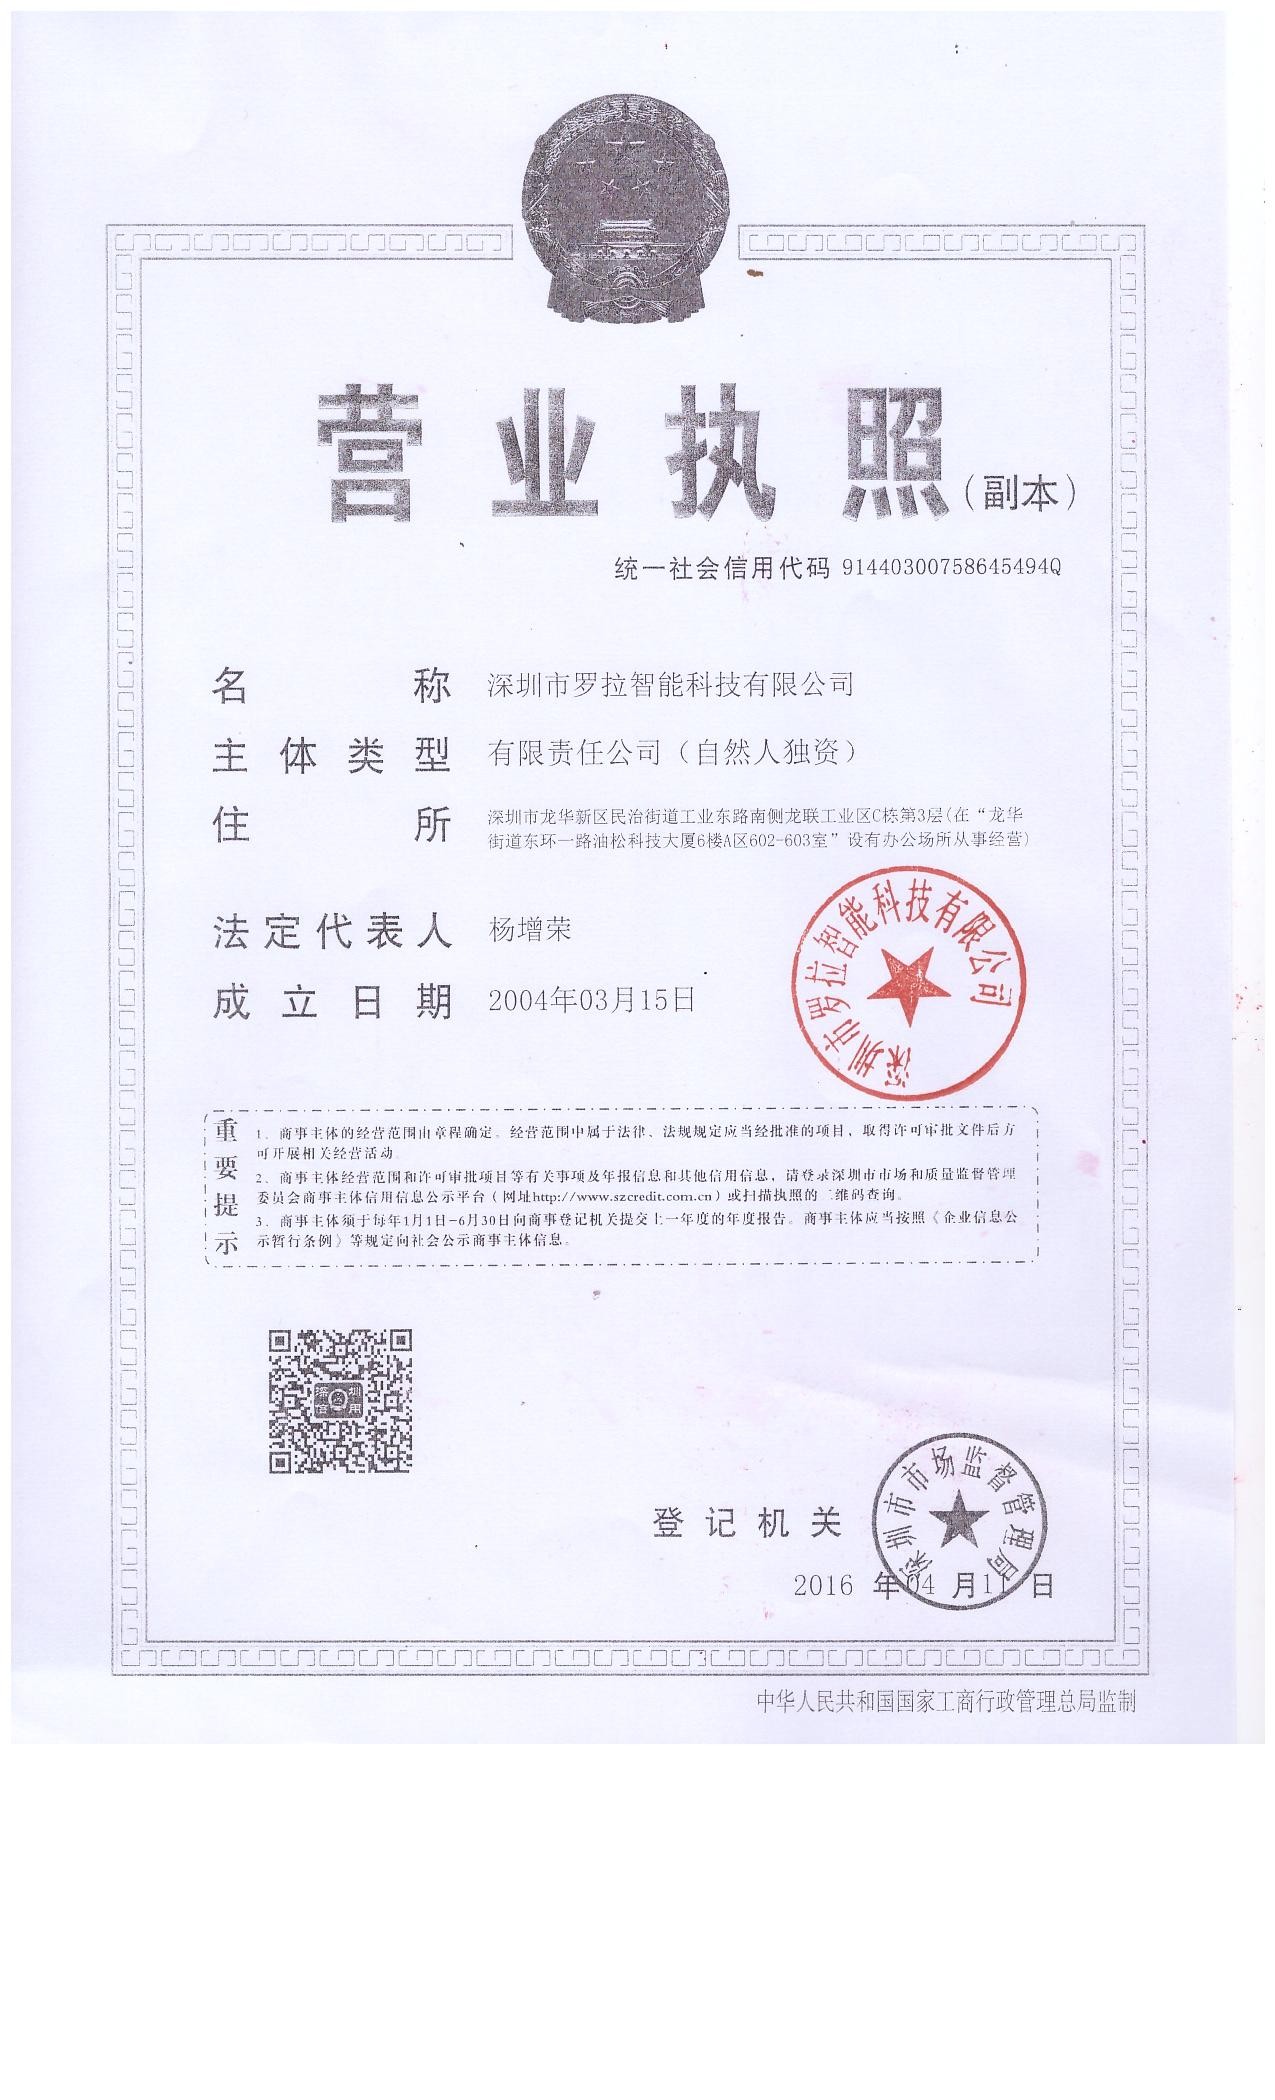 Shenzhen Rona Intelligent Technology Co., Ltd Certifications